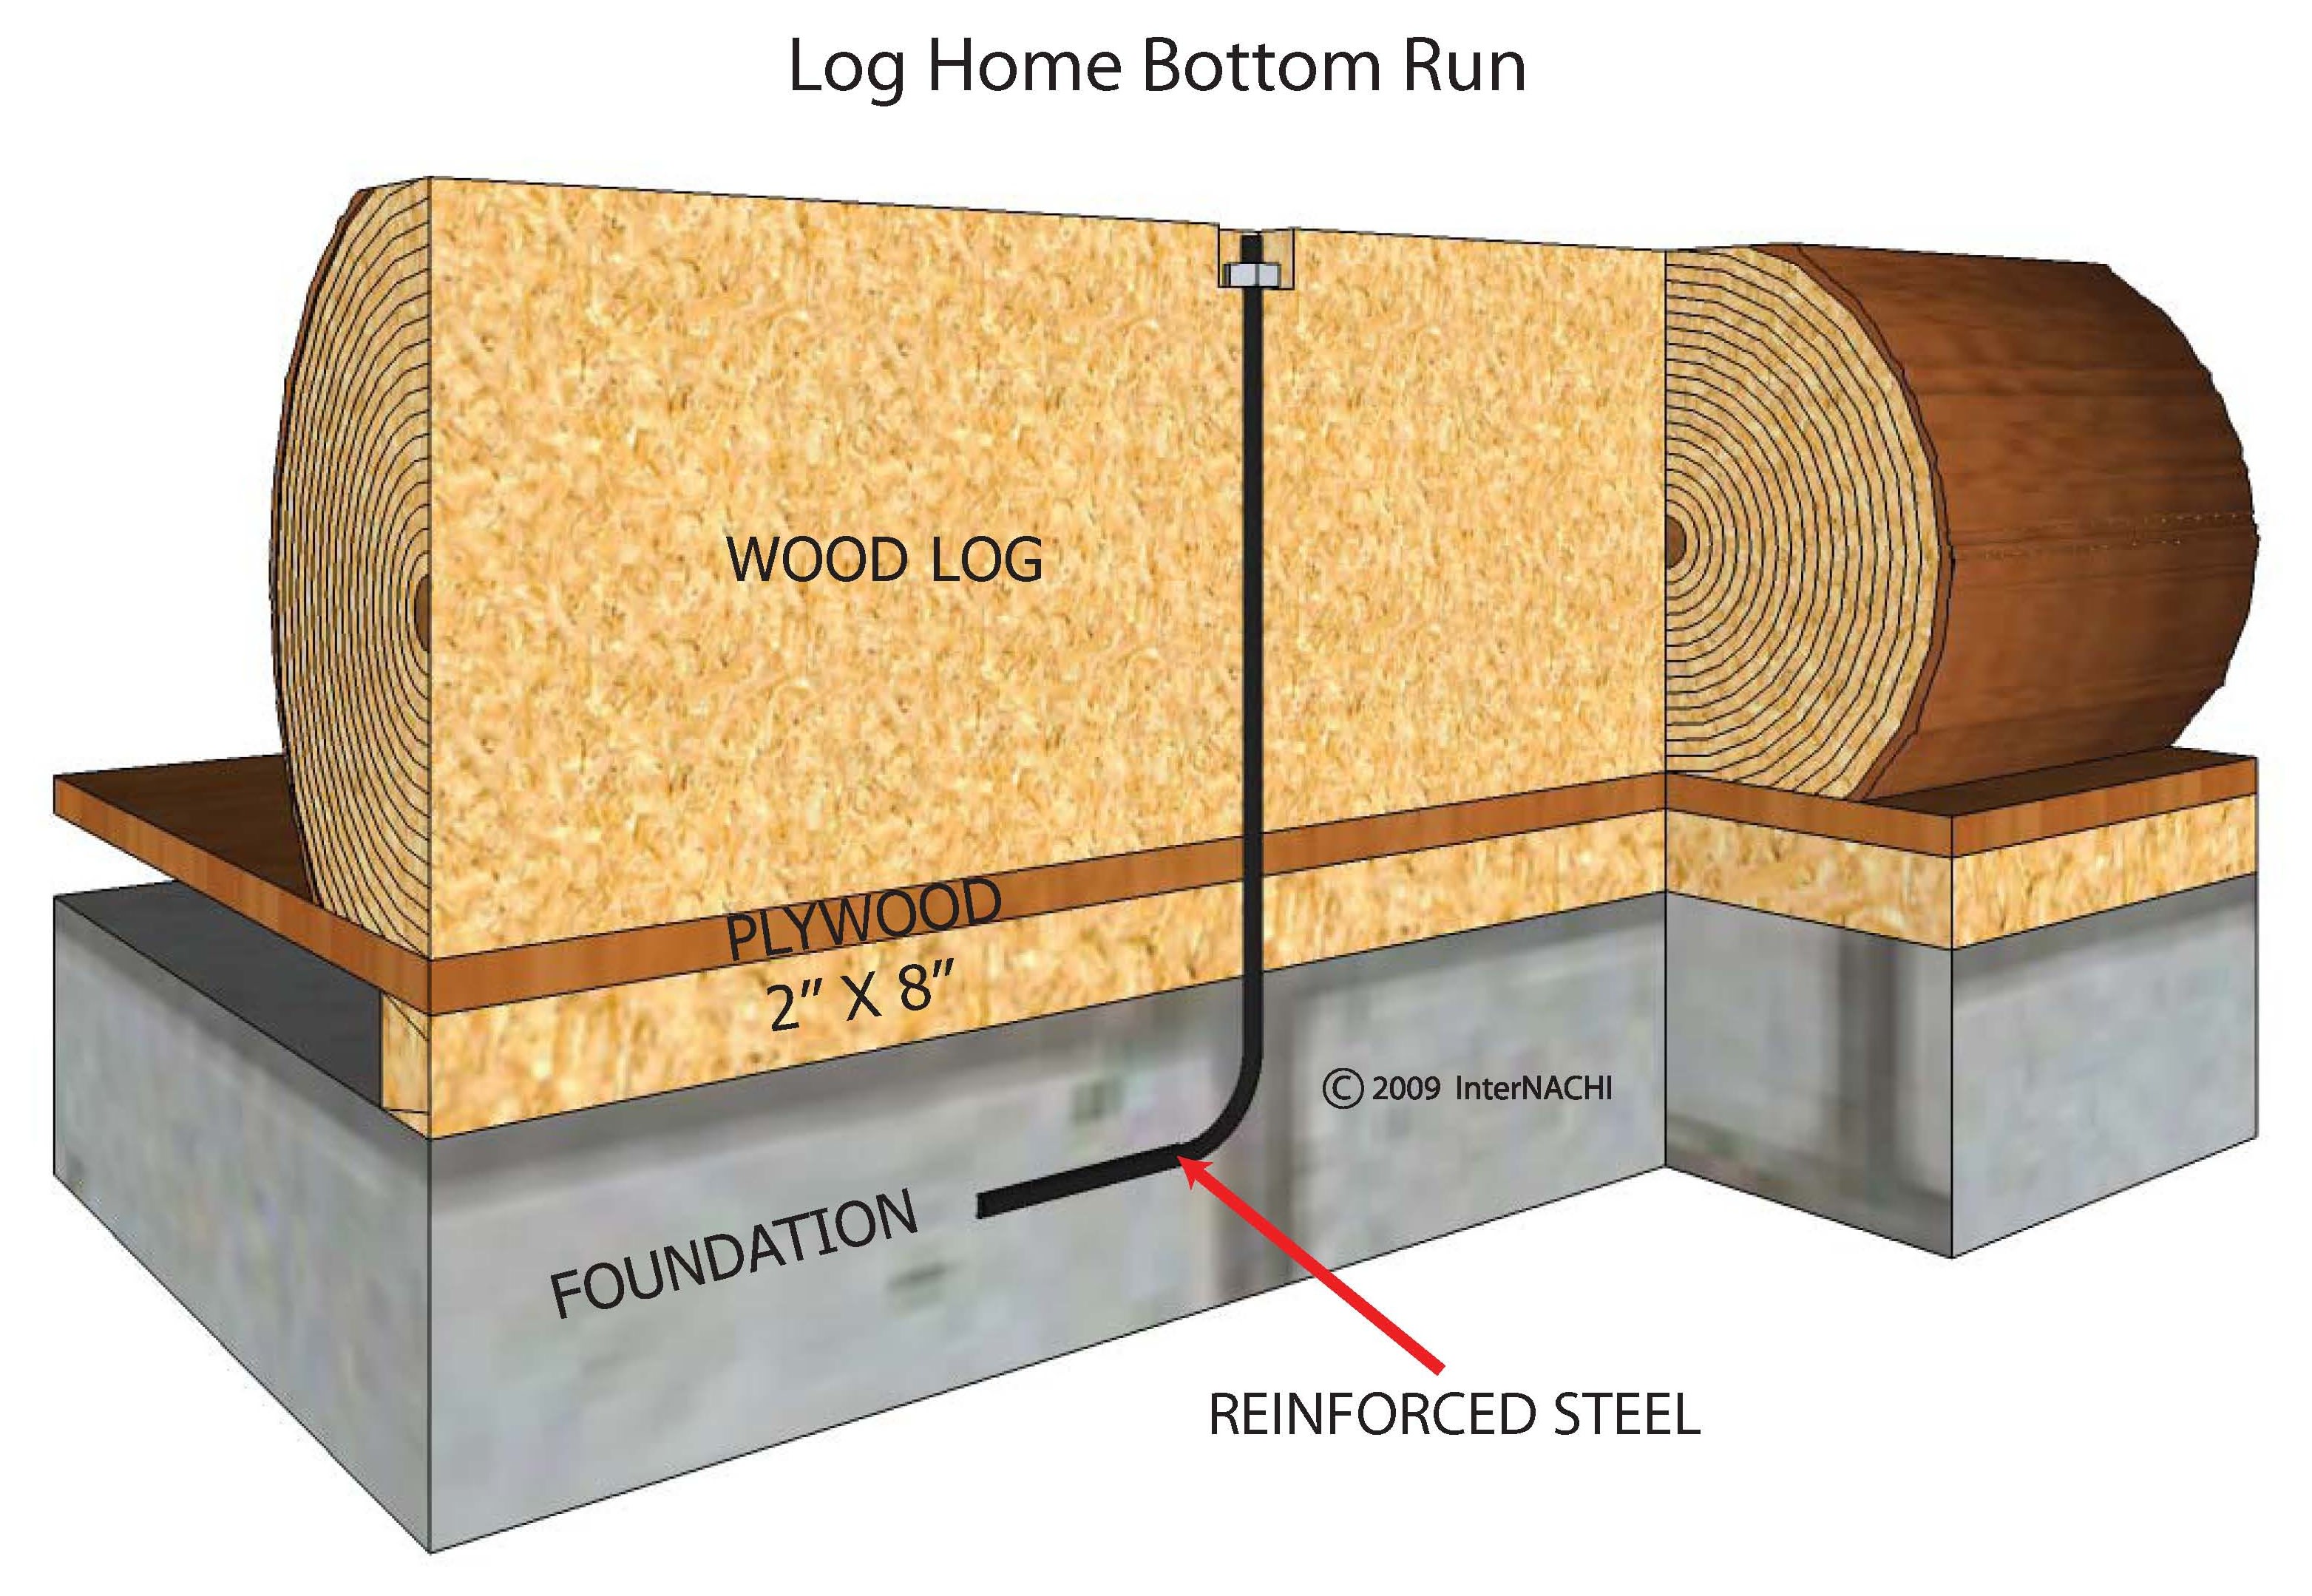 Log home bottom run.